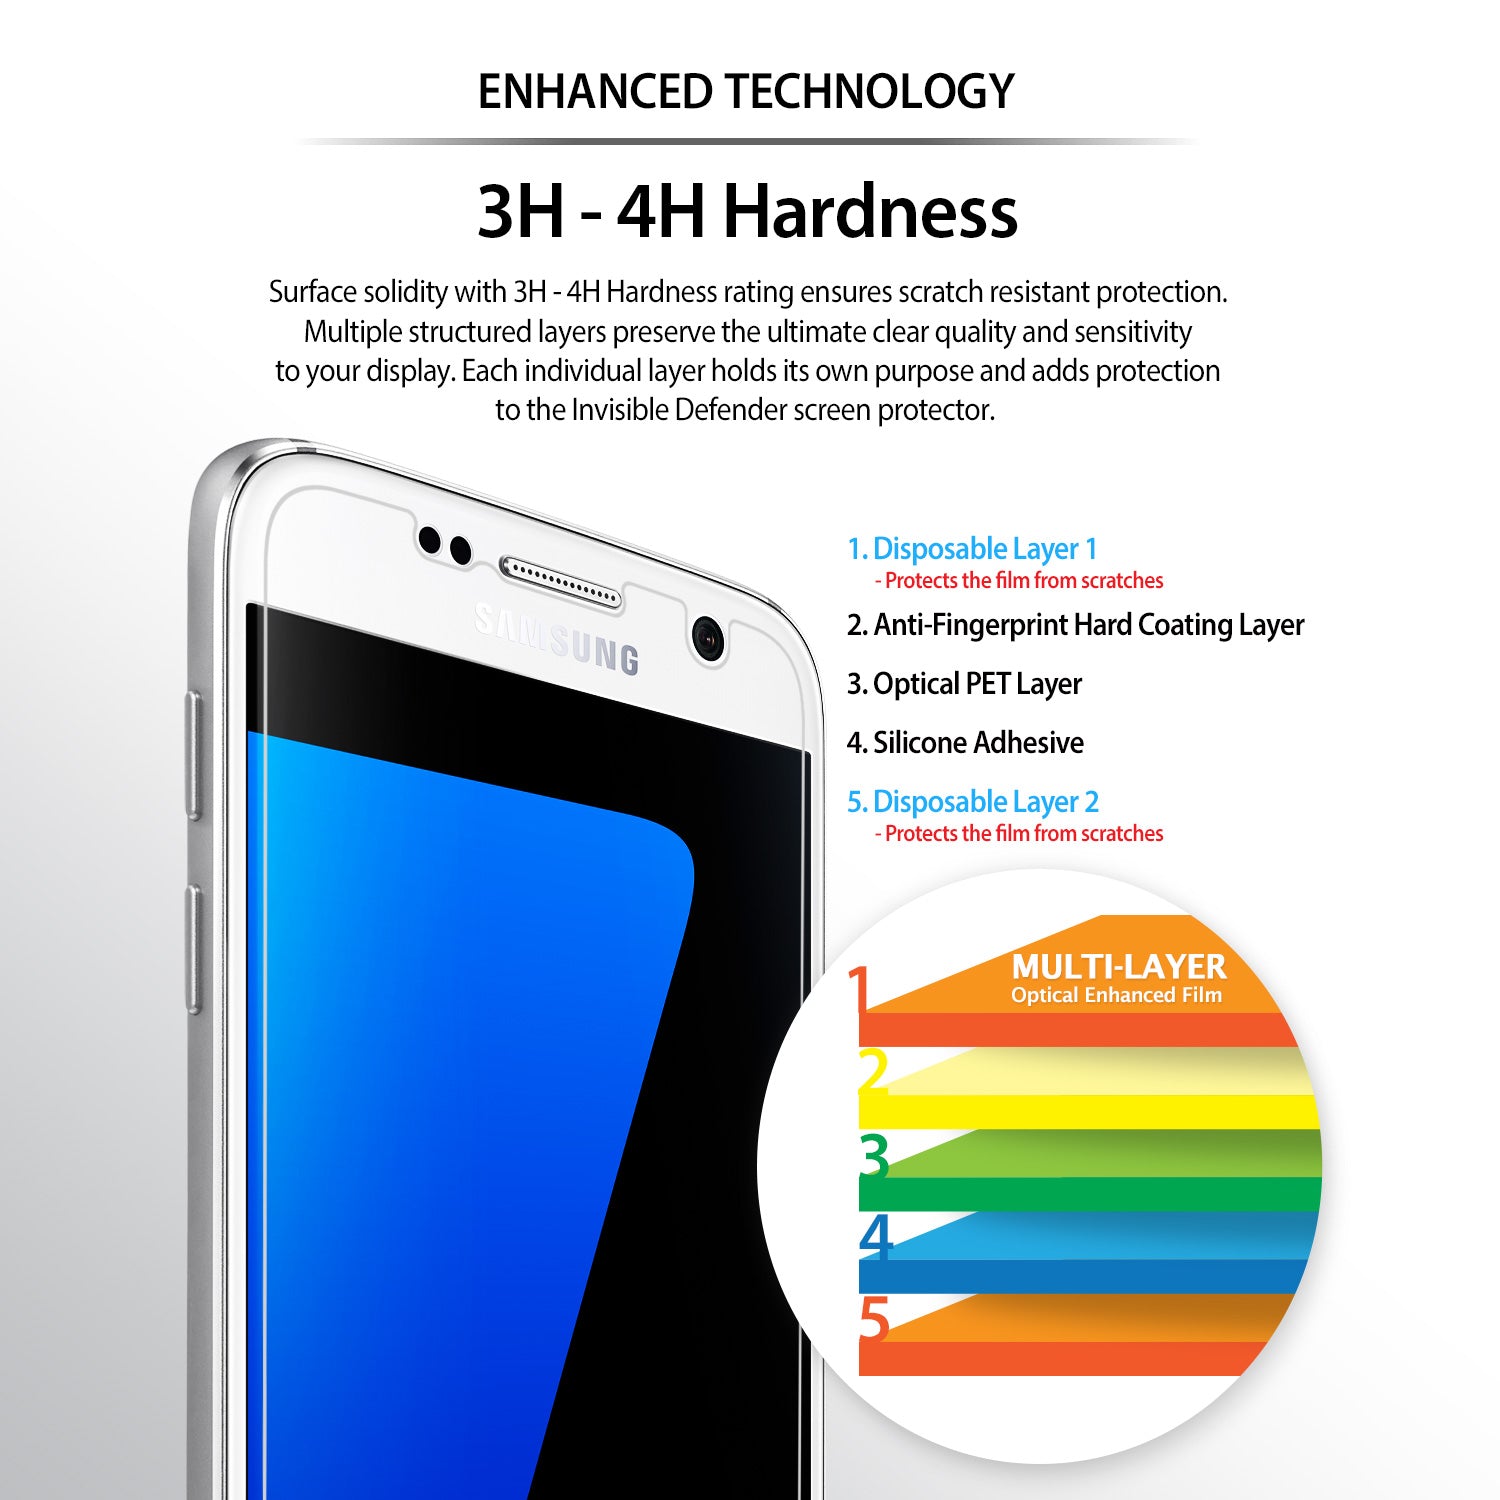 Galaxy S7 Screen Protector | Film (4P) - Enhanced Technology. 3H-4H Hardness.